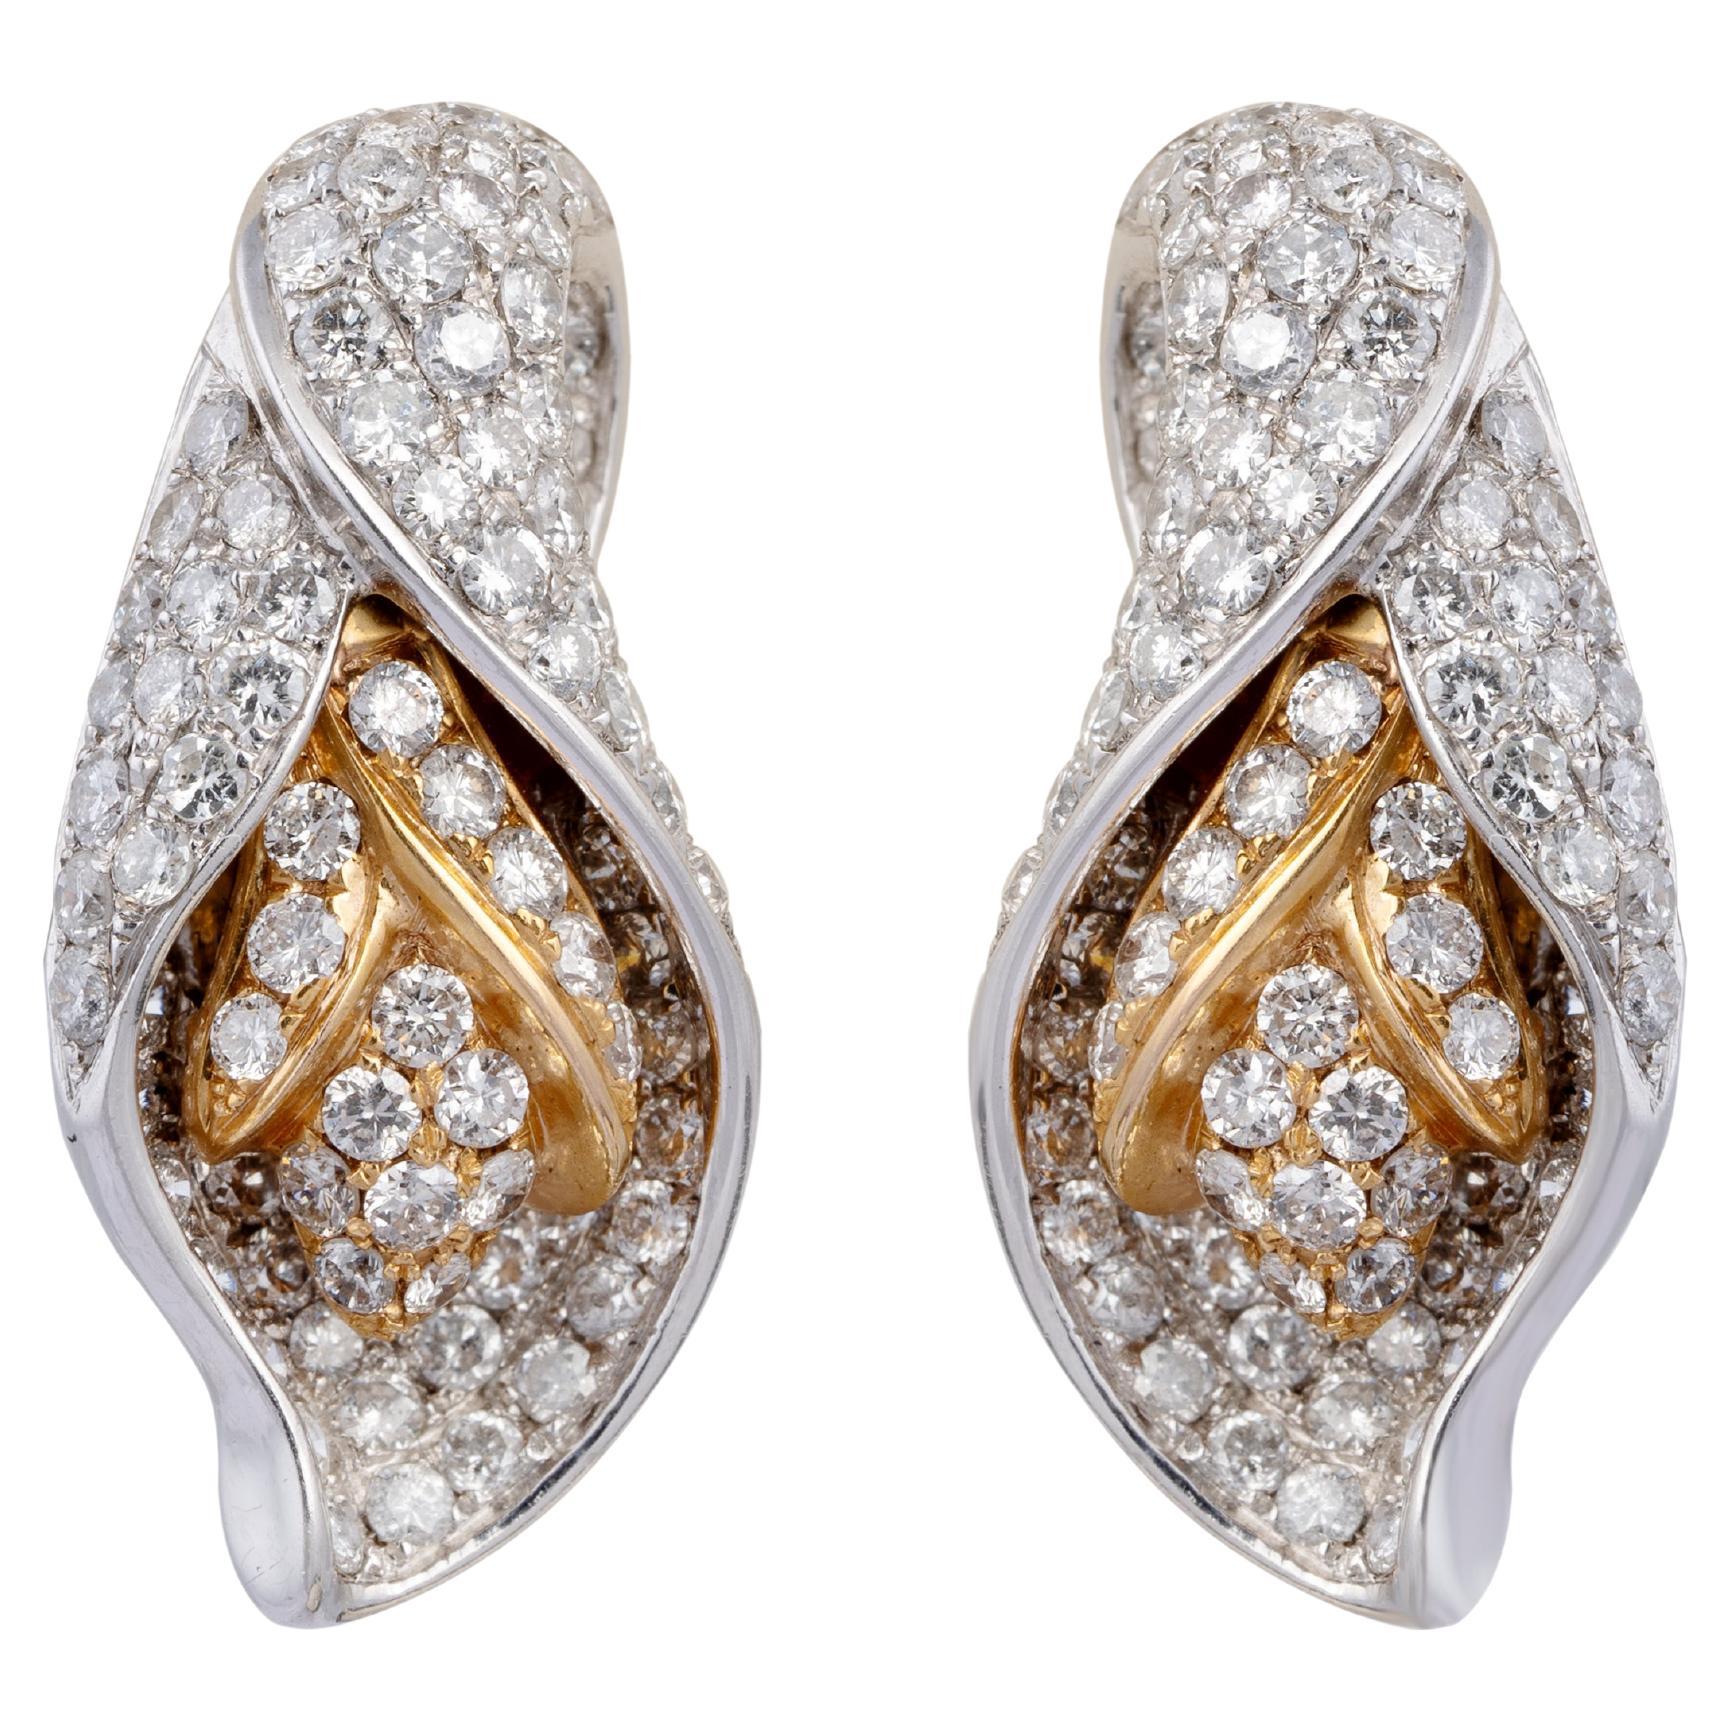 18k gold 1.59cts Diamond Earring